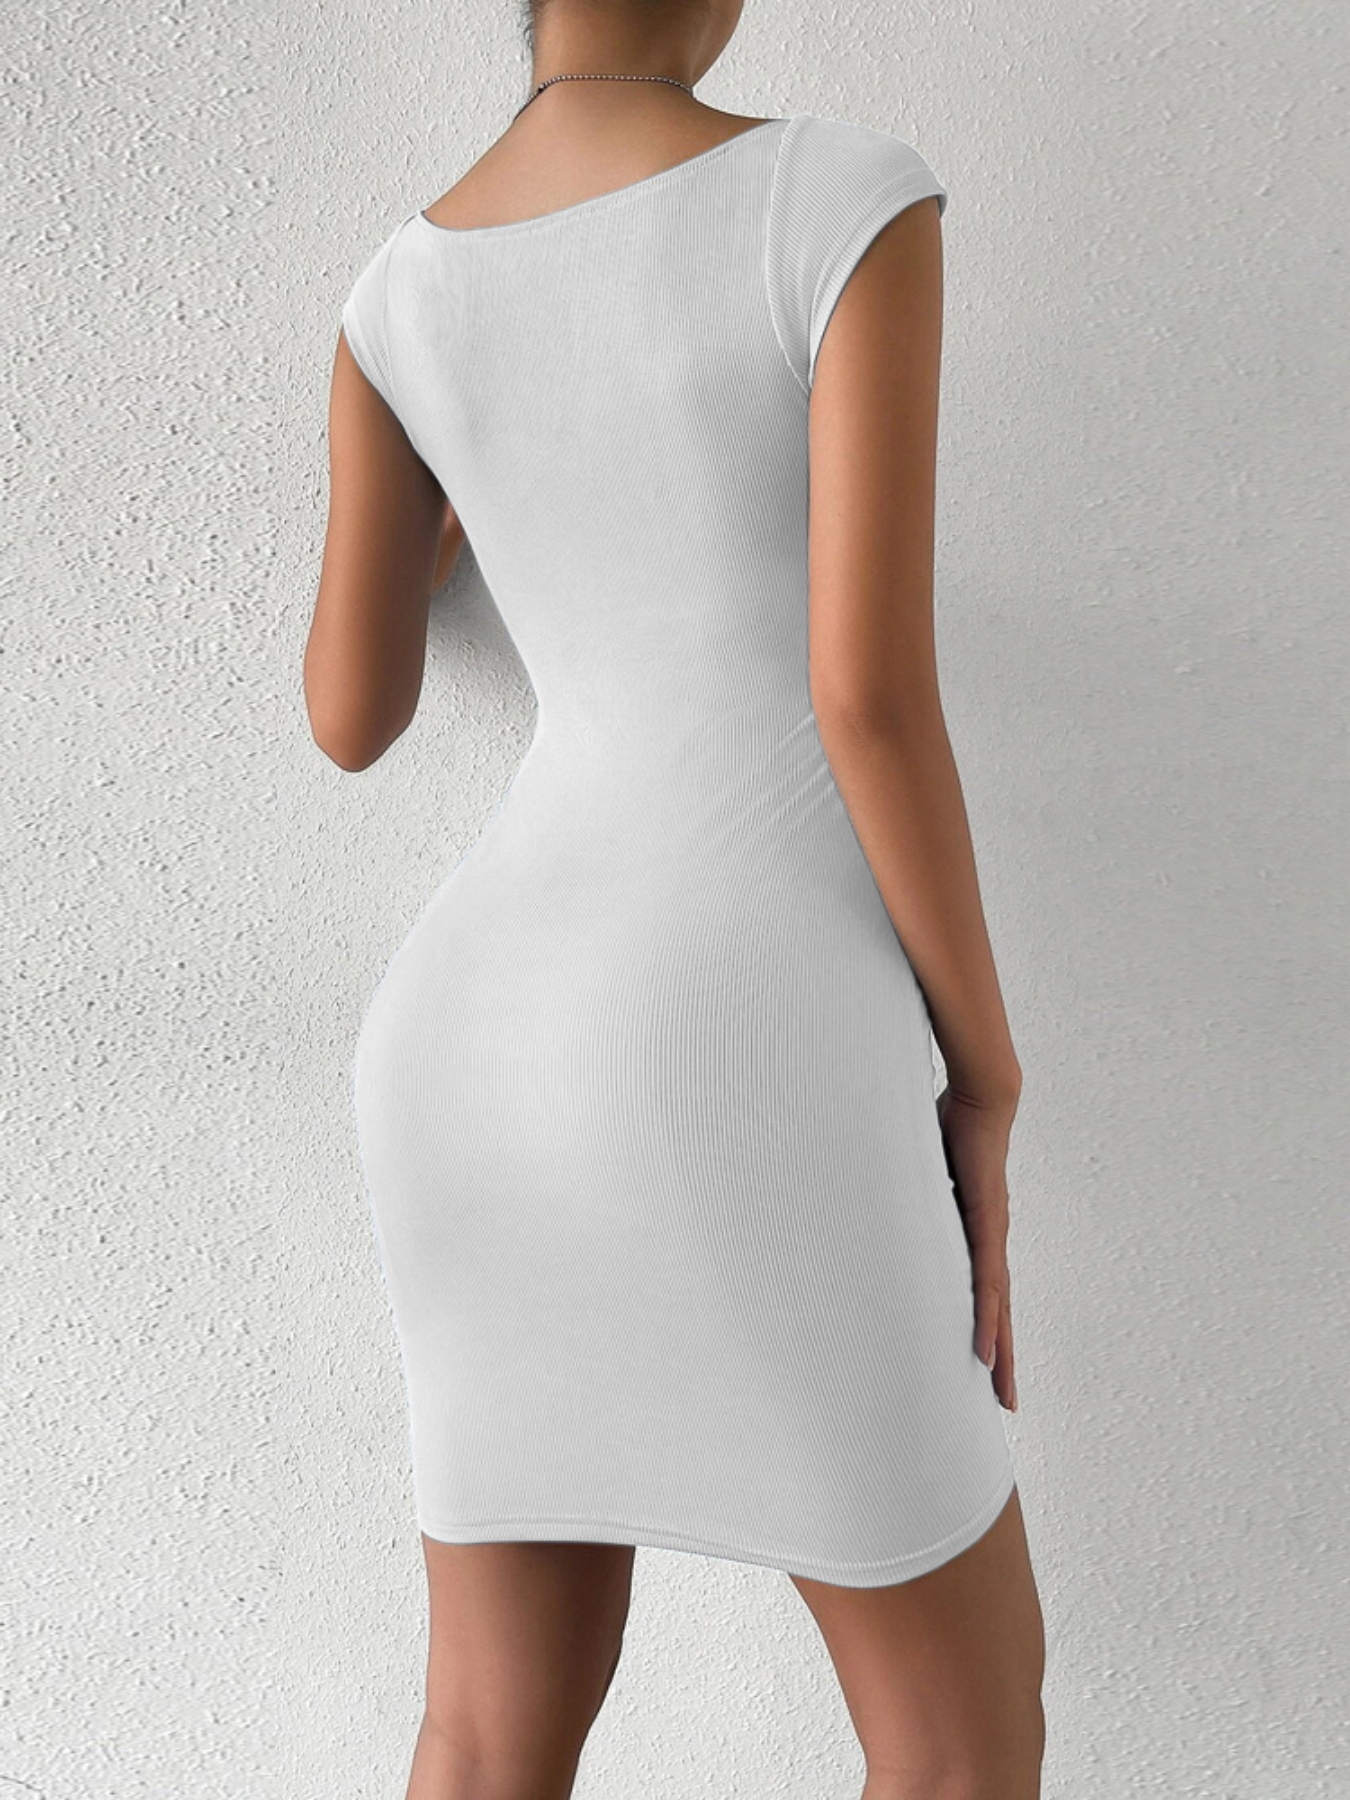 Women's White Mini Dress Short Sleeve Bodycon